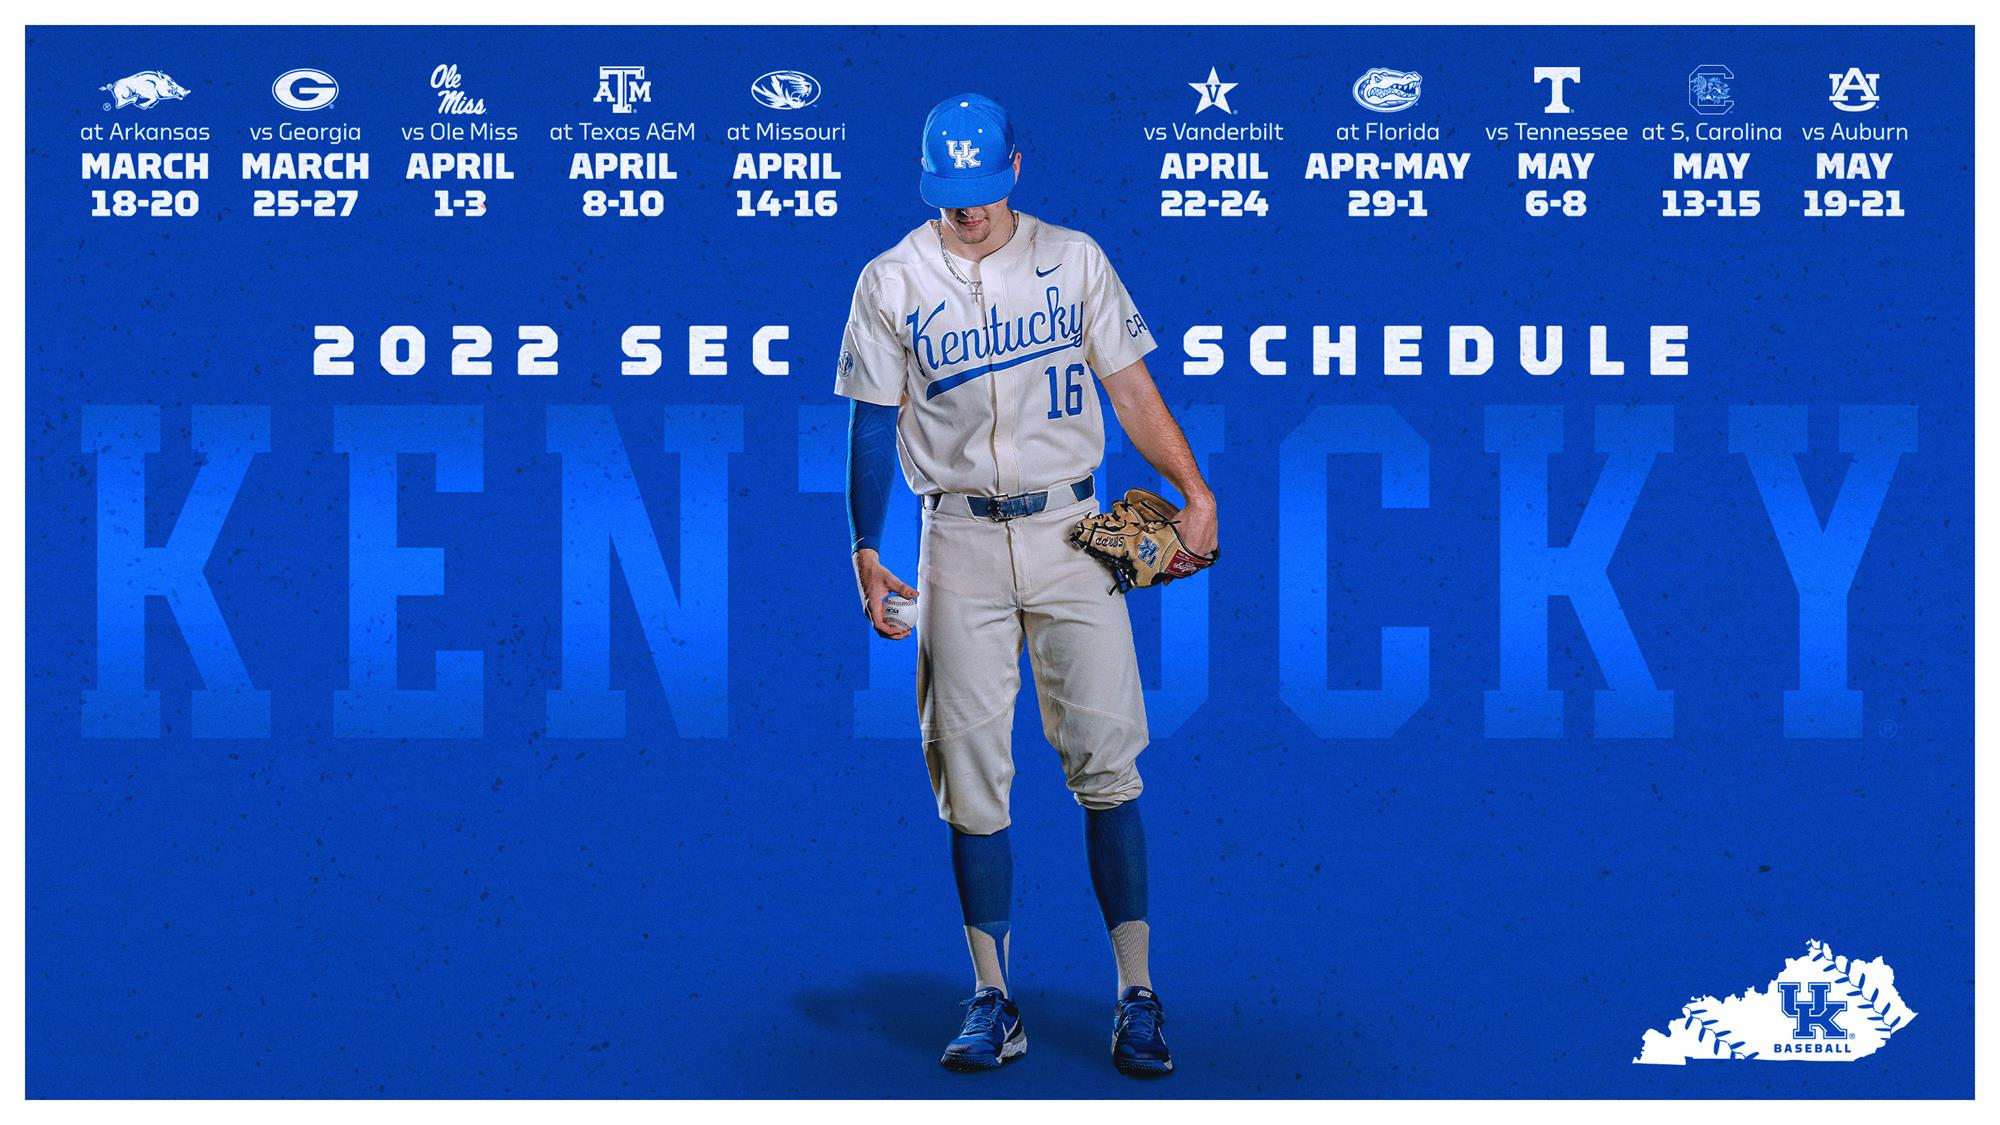 Kentucky Baseball Releases 2022 SEC Schedule